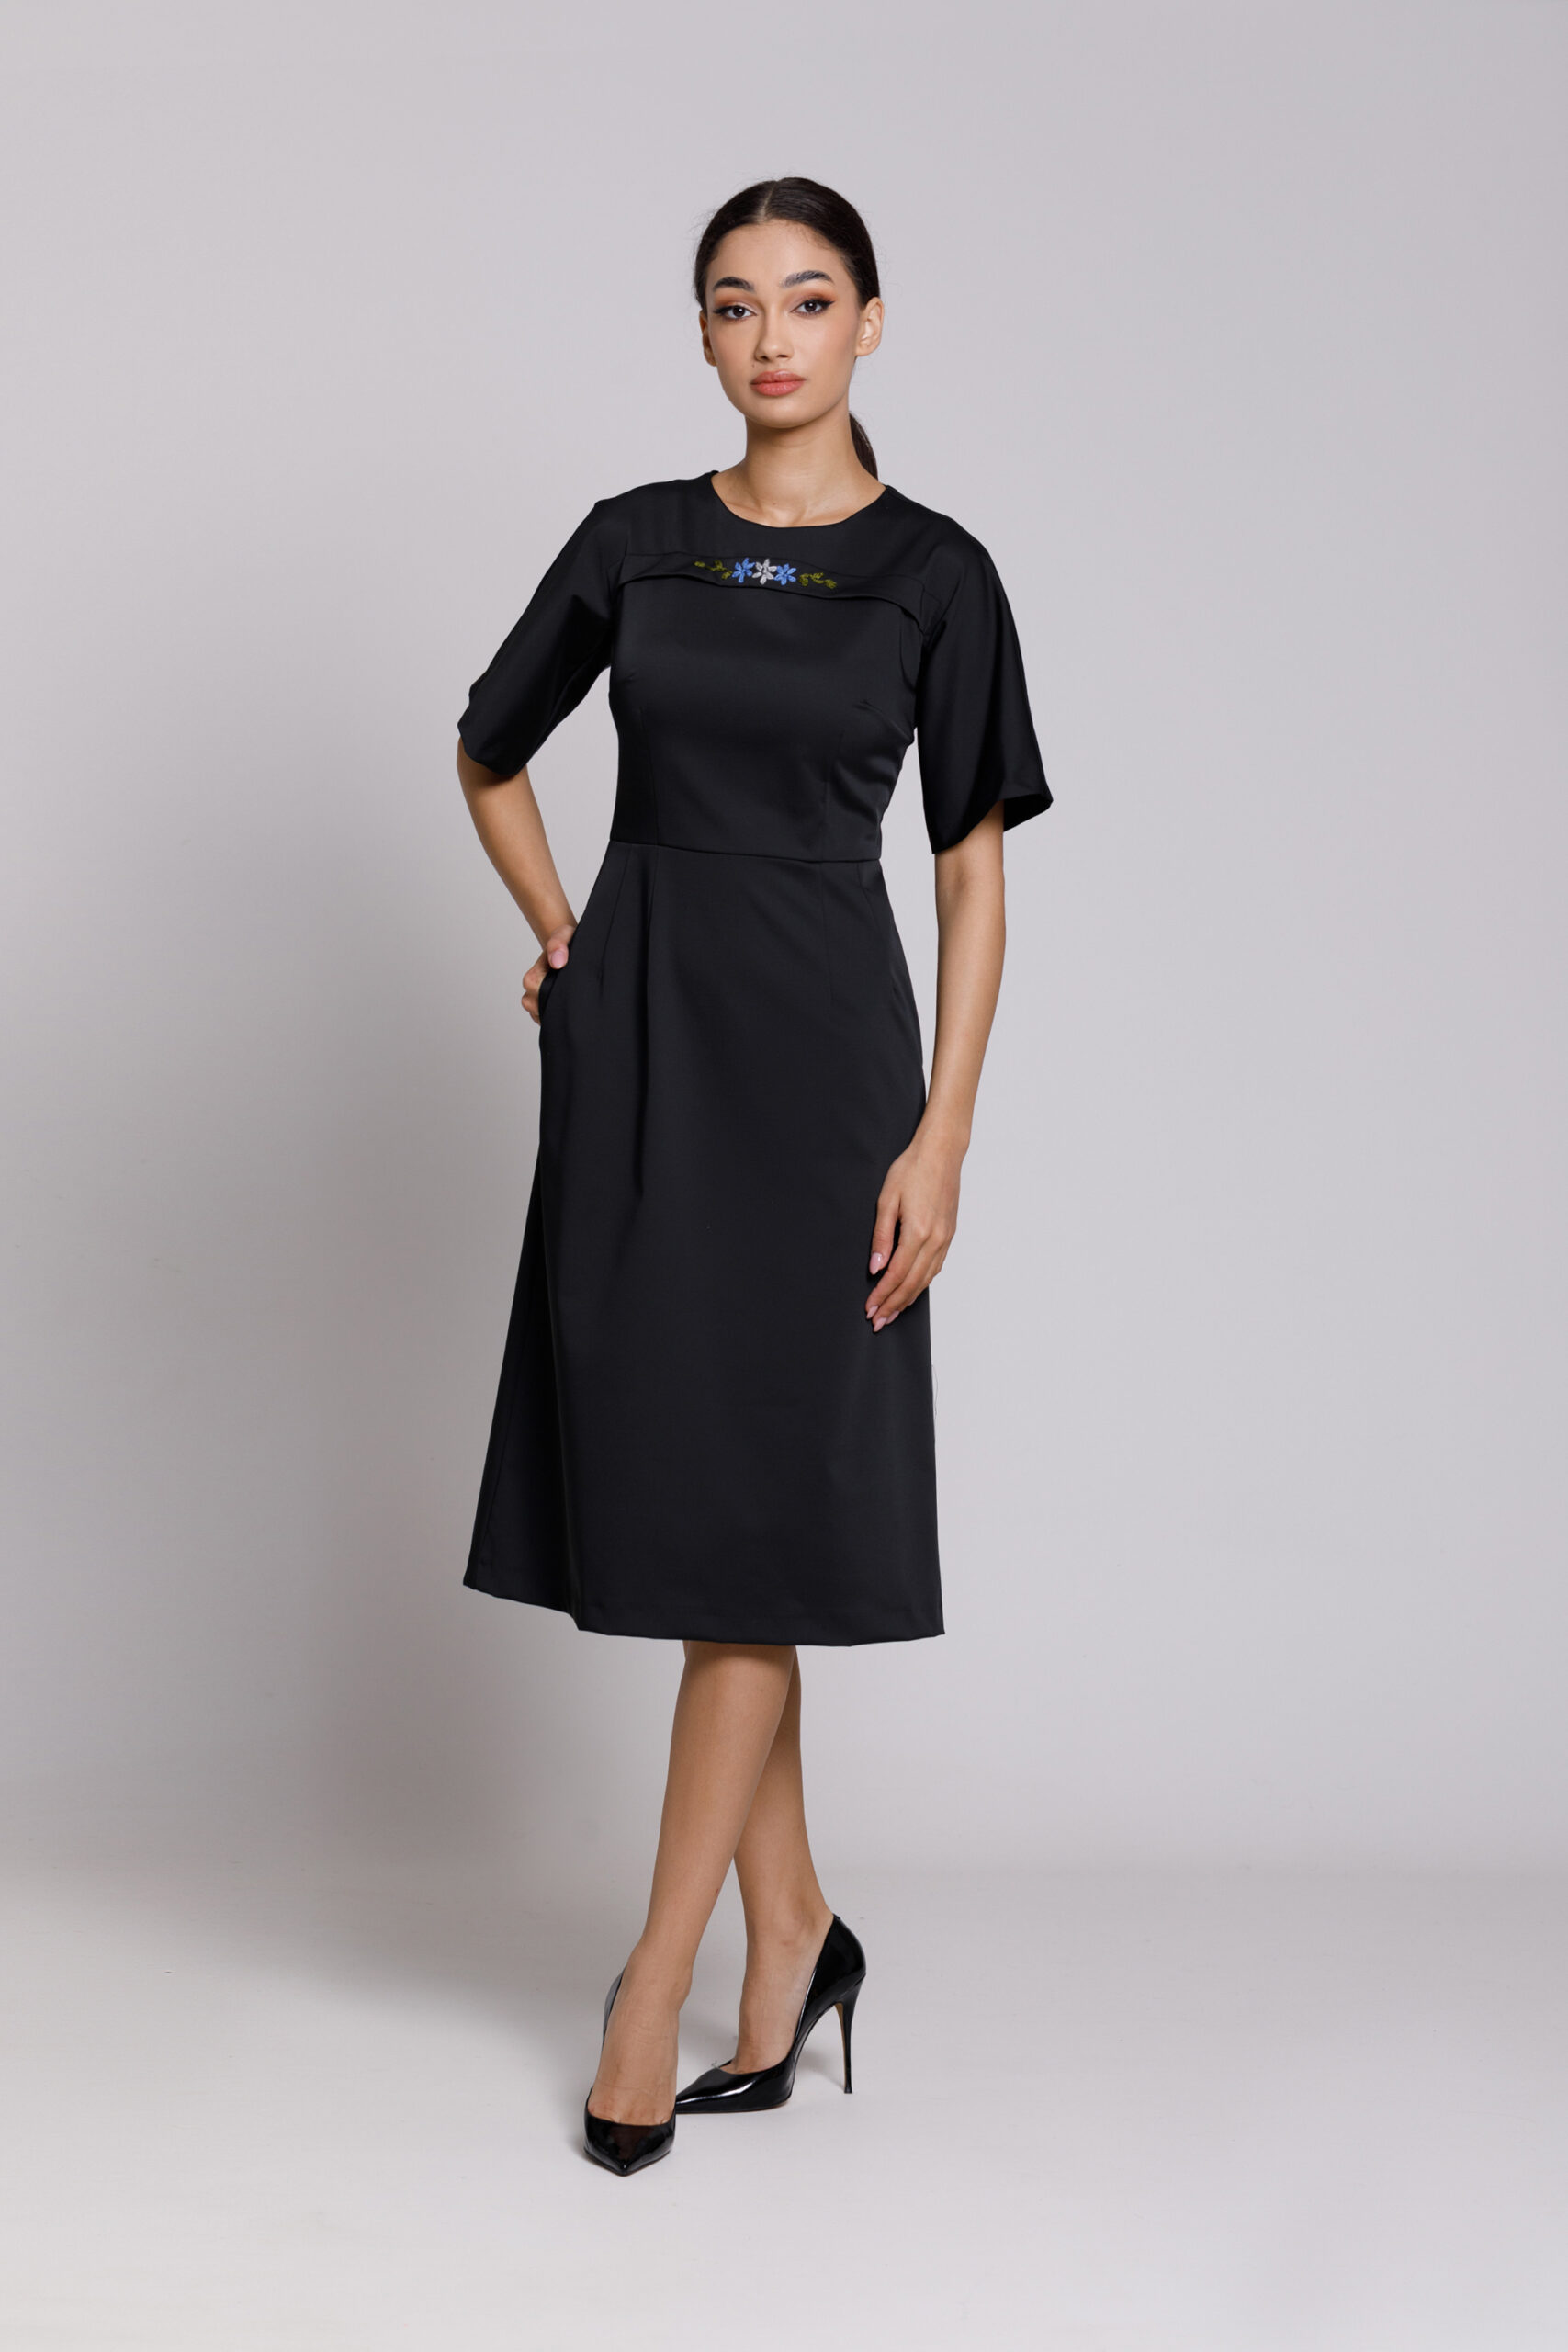 DARLA Elegant black dress with floral embroidery. Natural fabrics, original design, handmade embroidery